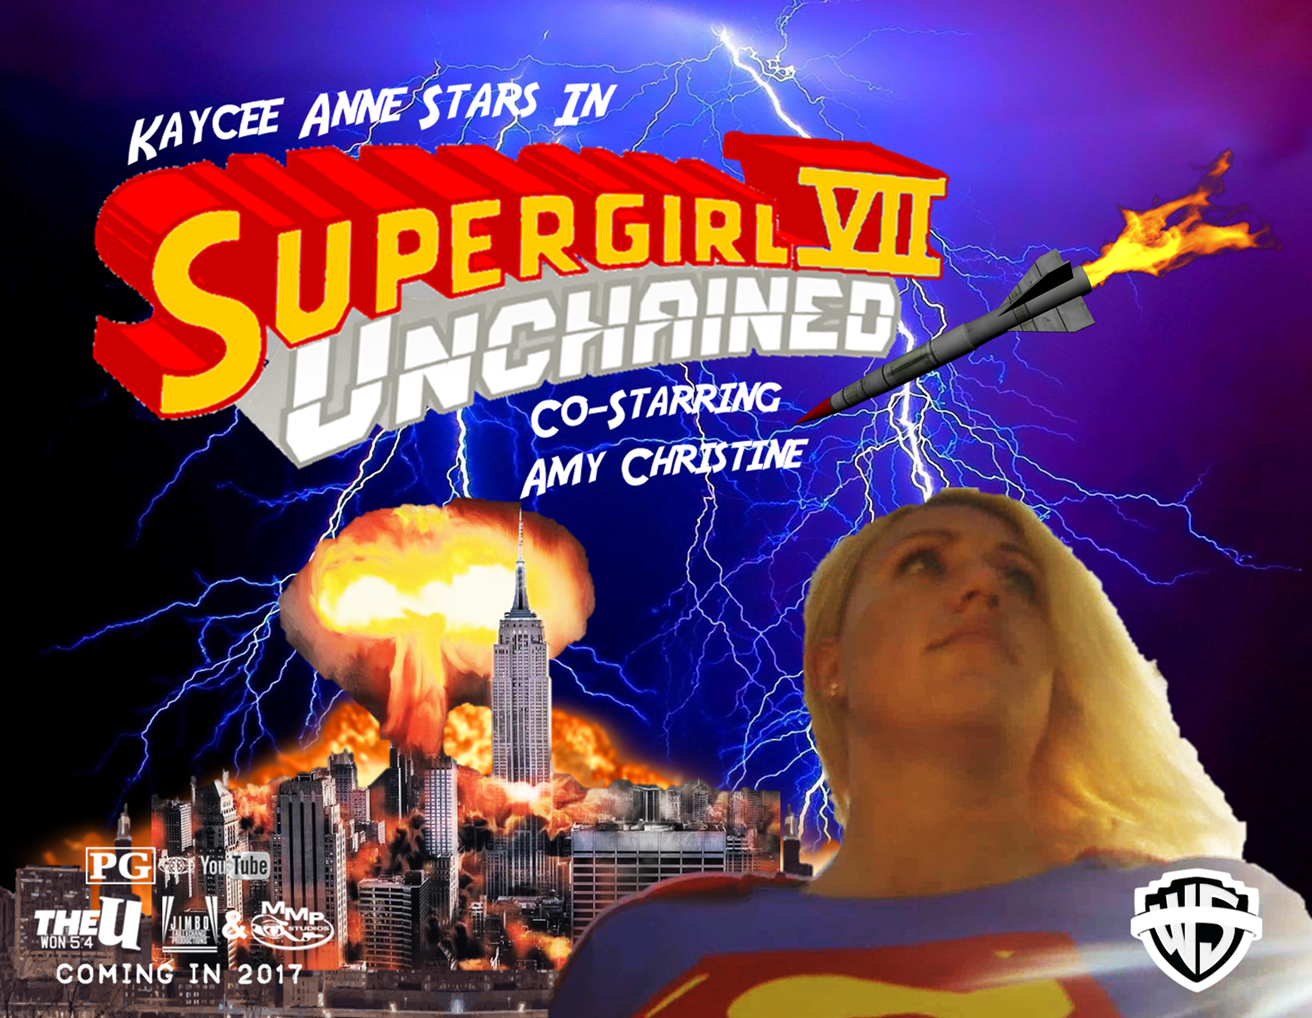 supergirl7misslecitybombposter.png